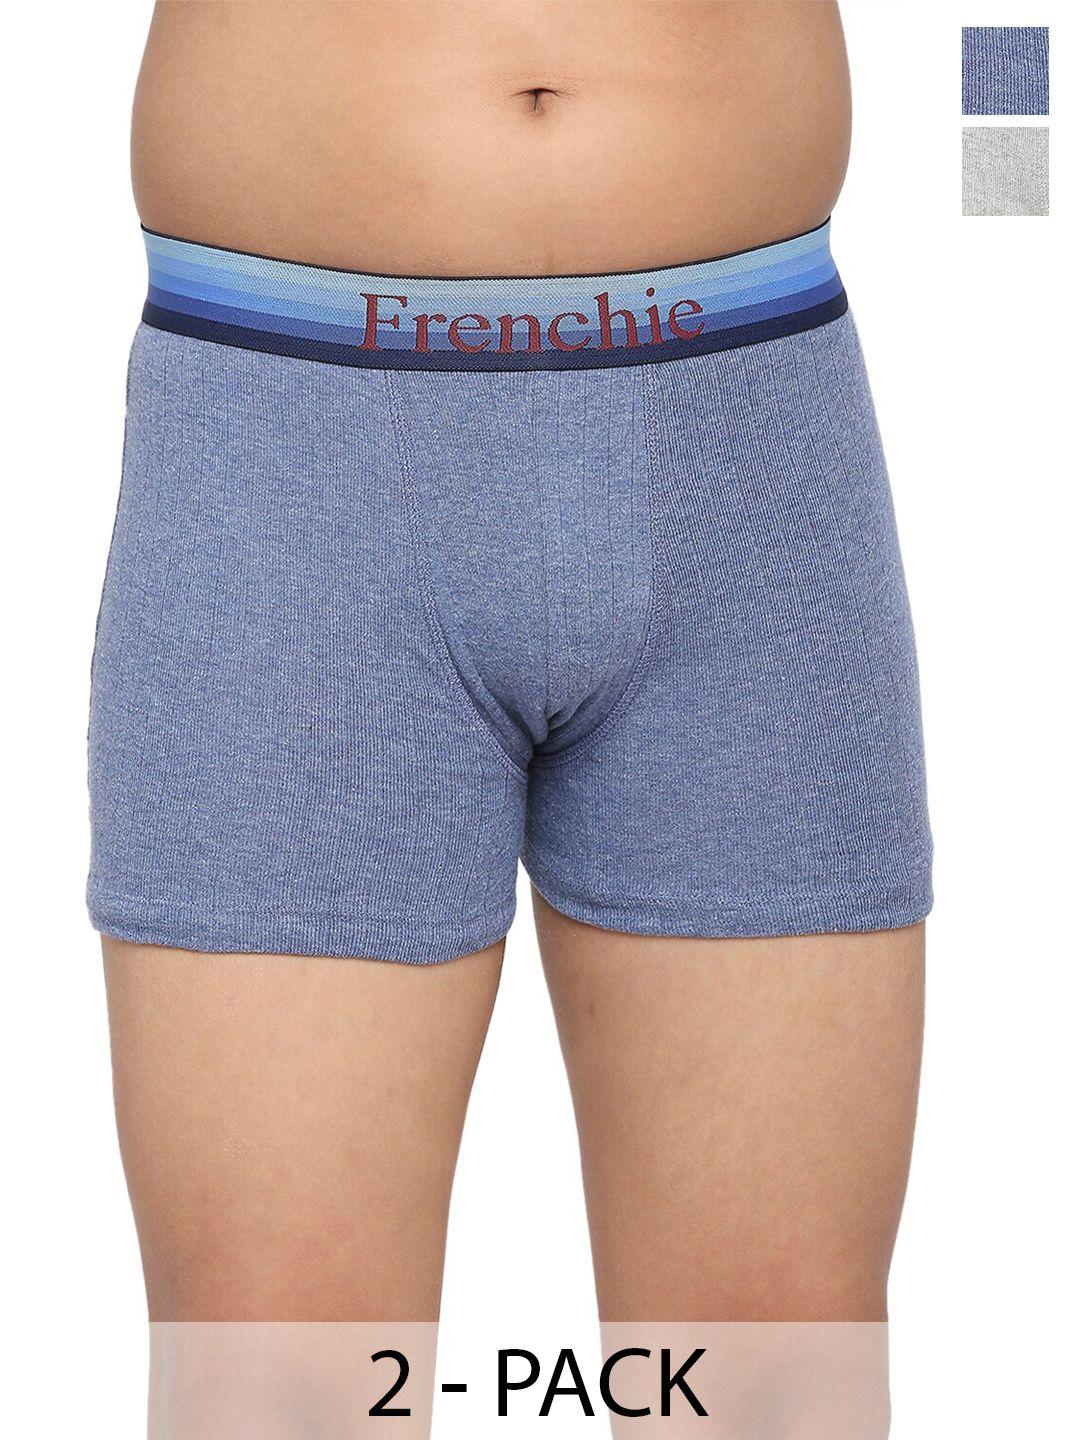 frenchie-boys-pack-of-2-cotton-trunks-fr-bi-tr-u1902-1x5-blue-gray-xs